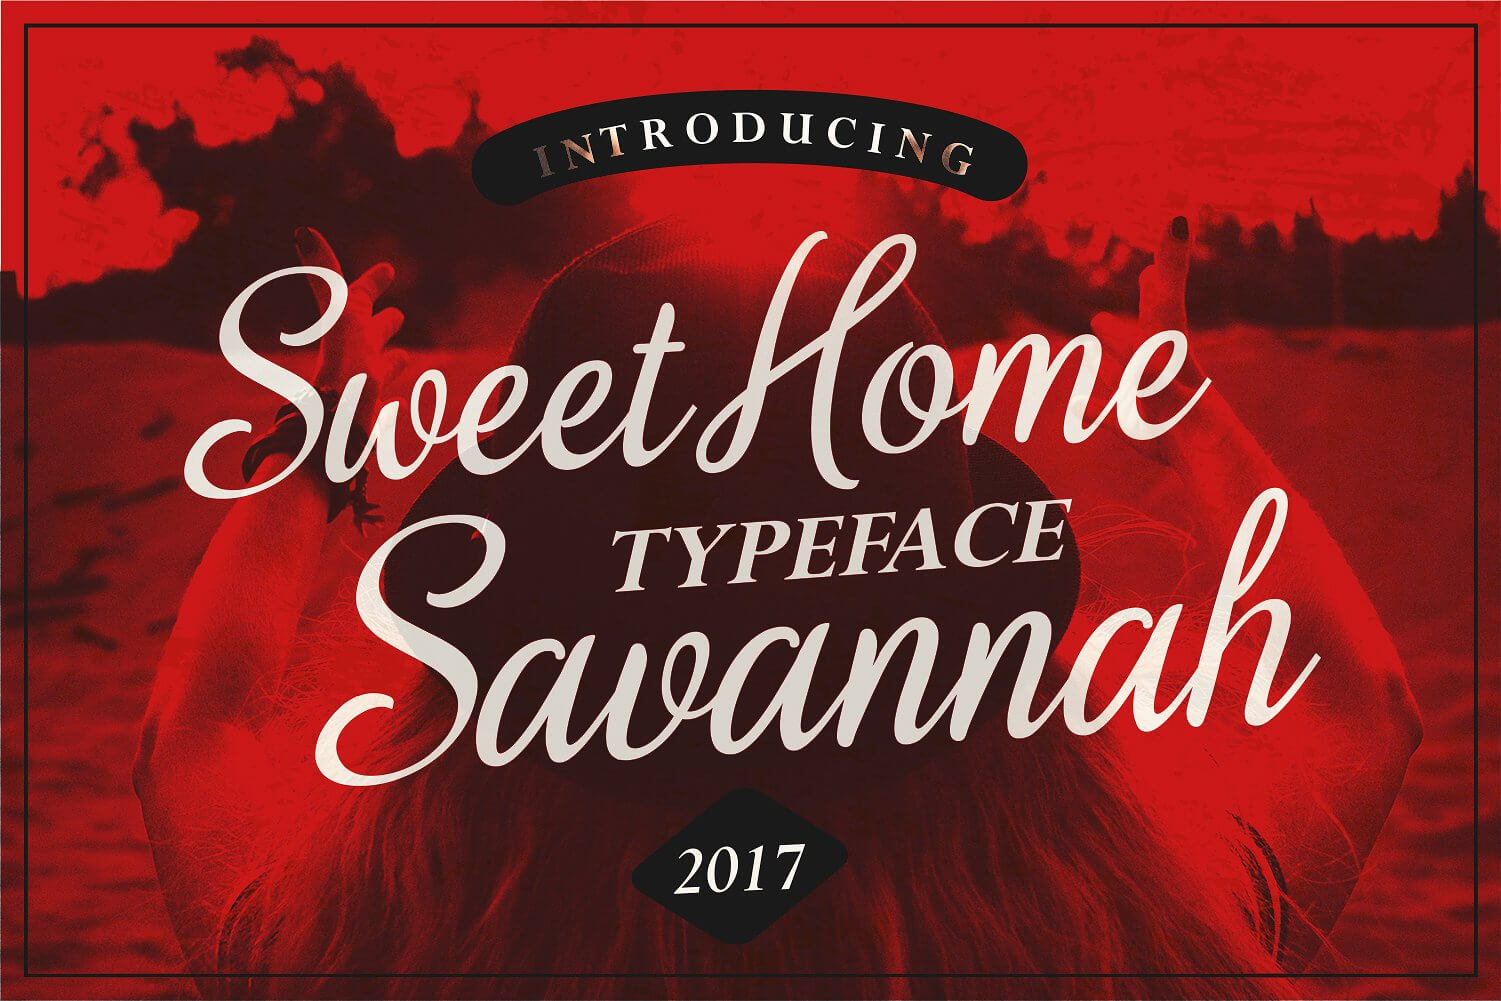 Sweet Home Savannah 1